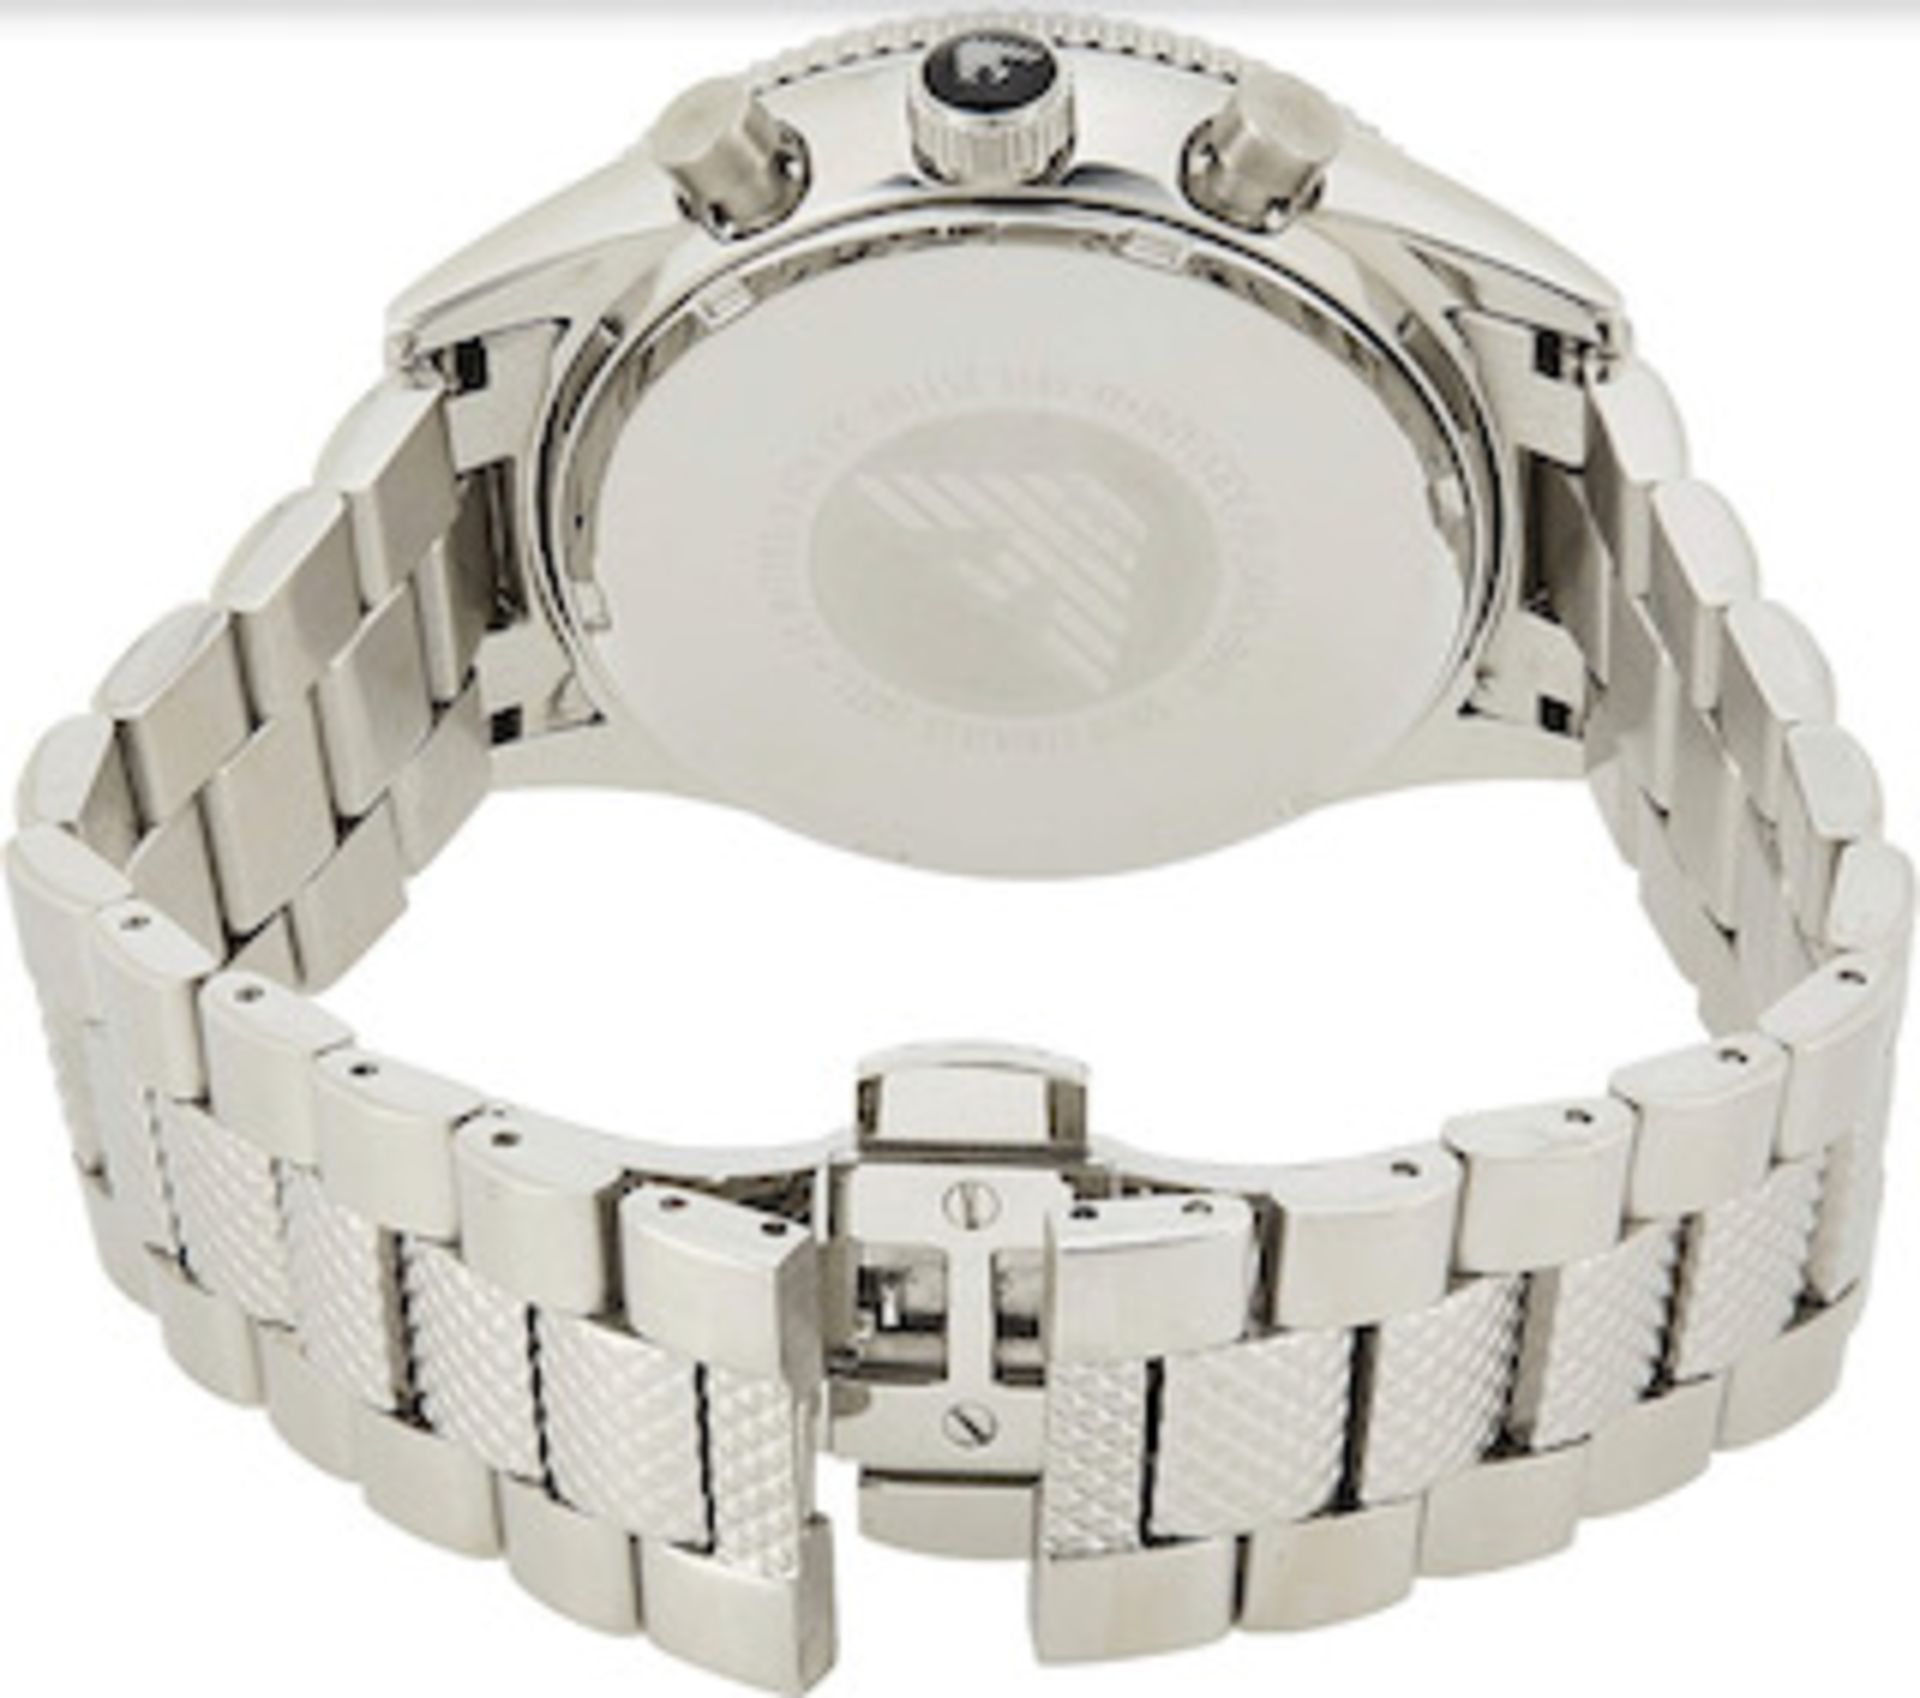 Emporio Armani AR5855 Men's Black Dial Silver Tone Bracelet Quartz Chronograph Watch - Image 6 of 10